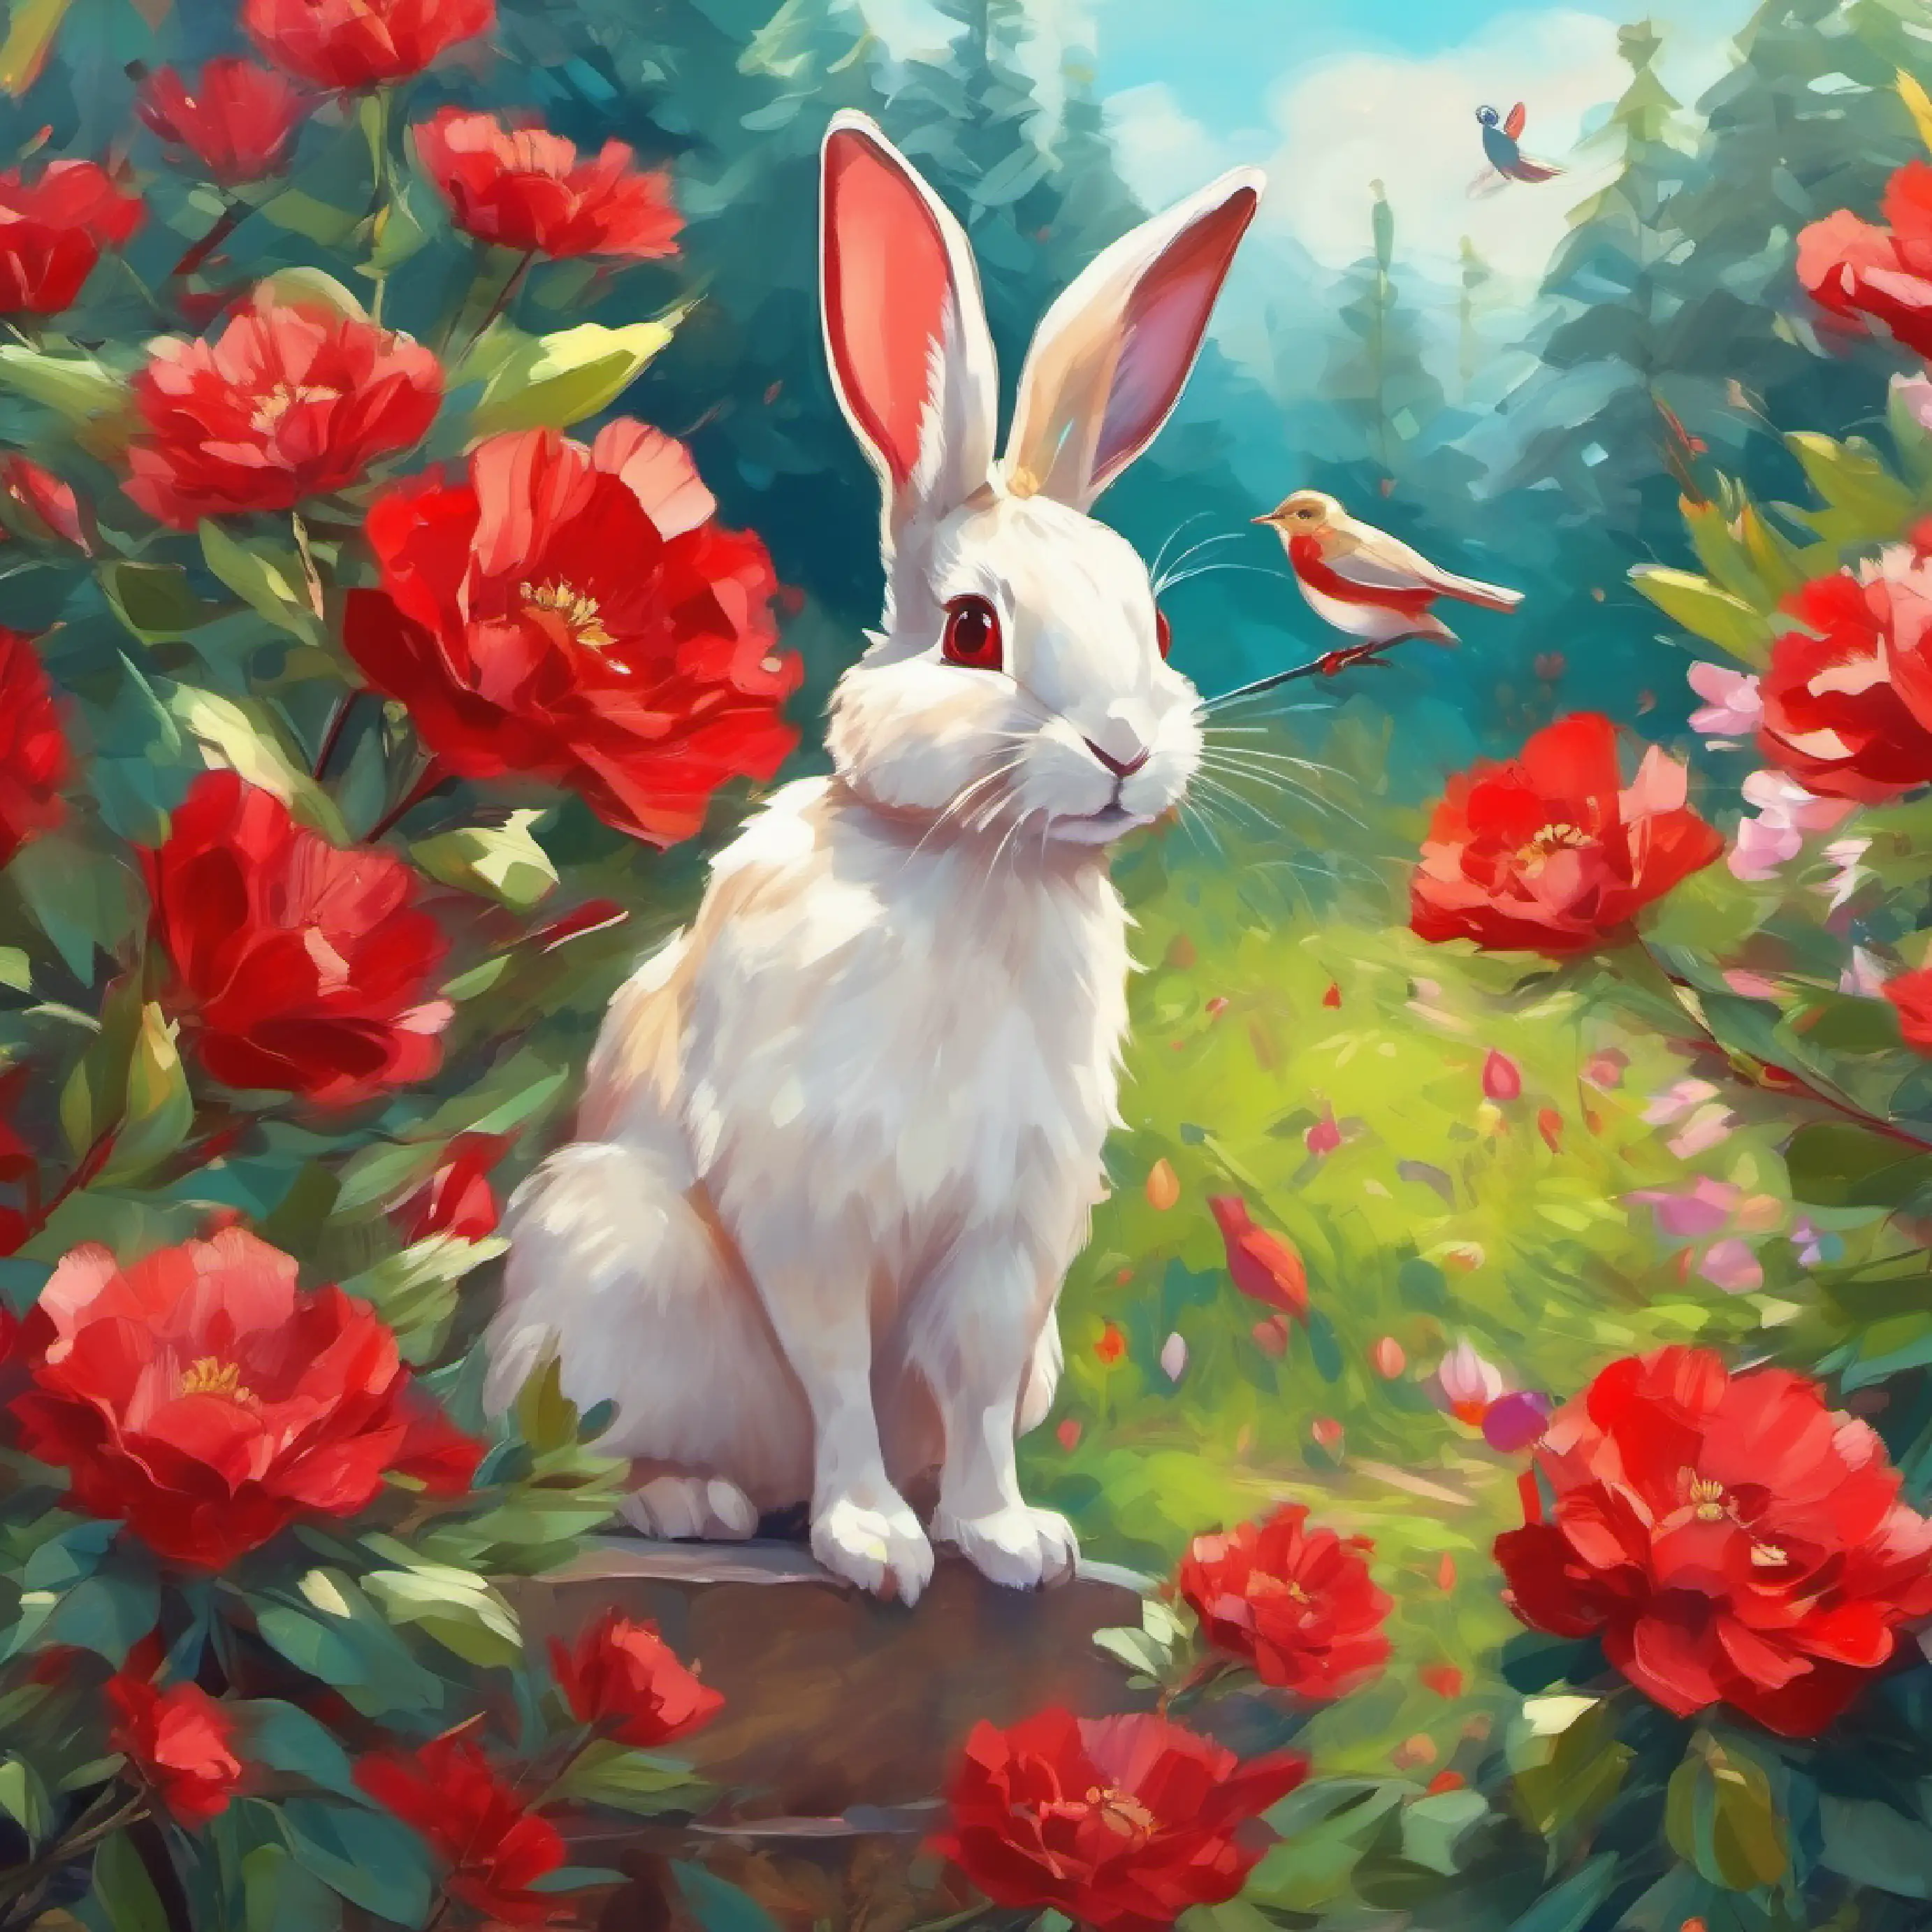 Red on flowers, joyful birds, young rabbit in awe.